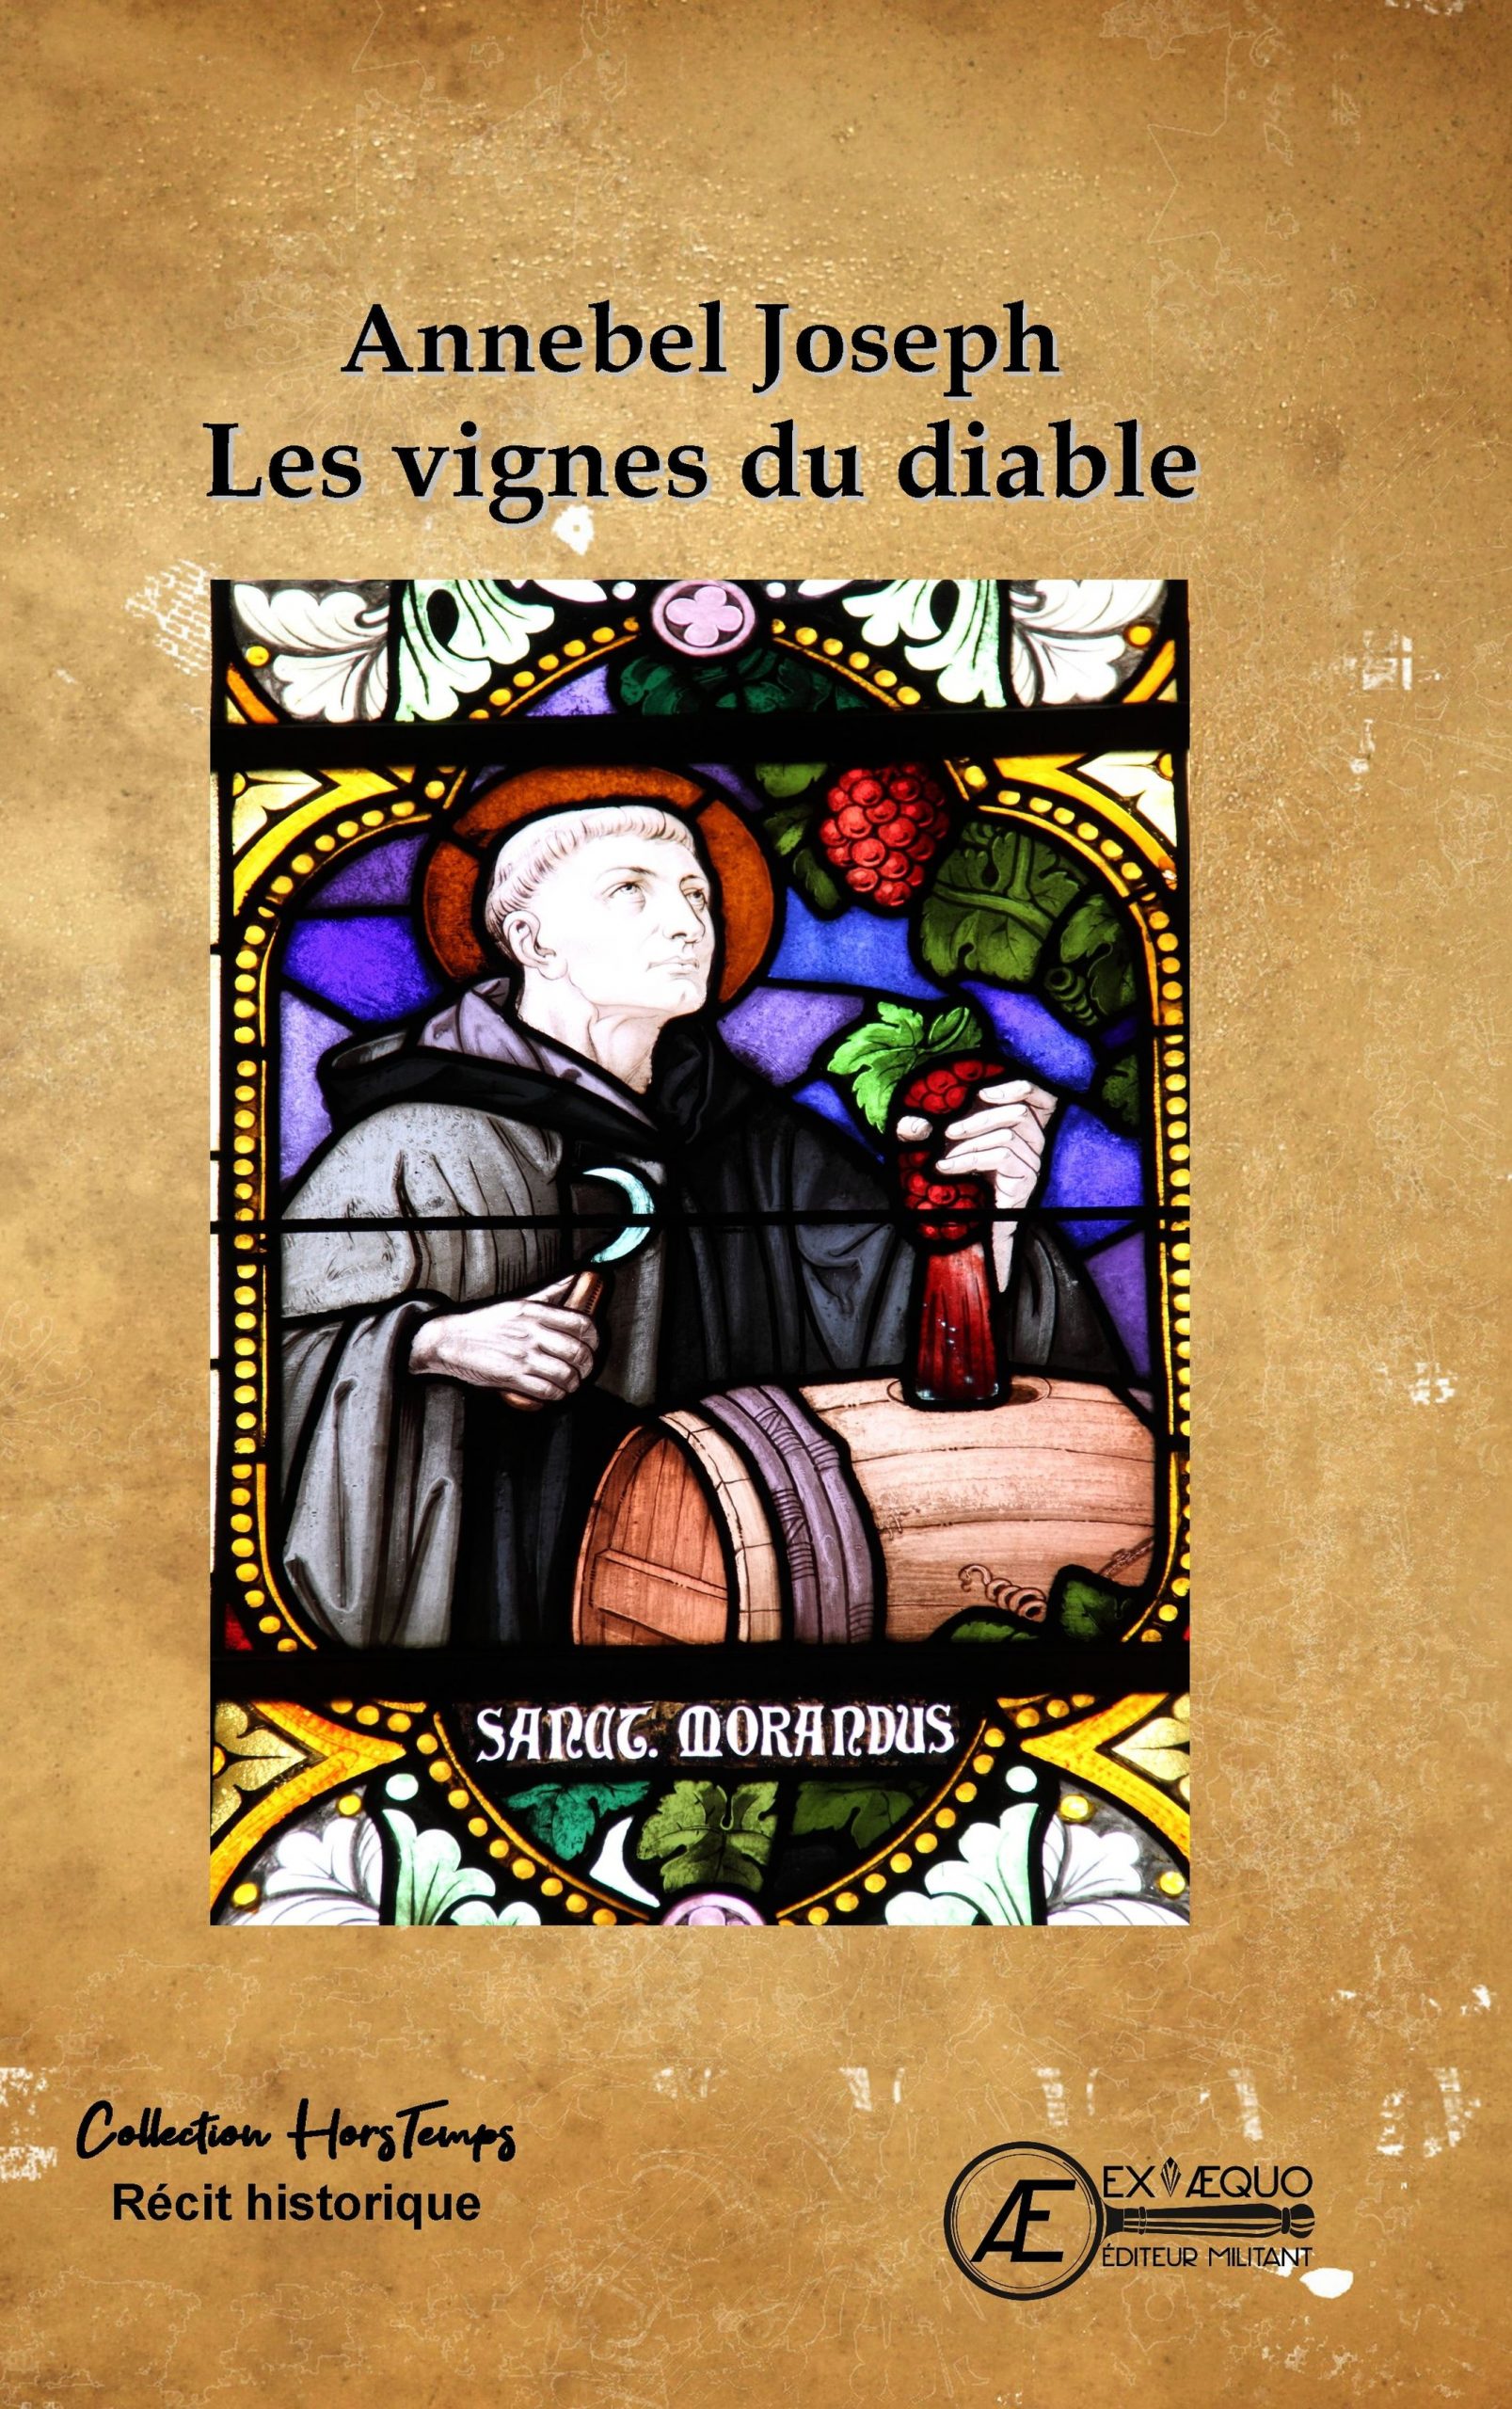 You are currently viewing Les vignes du diable, d’Annebel Joseph